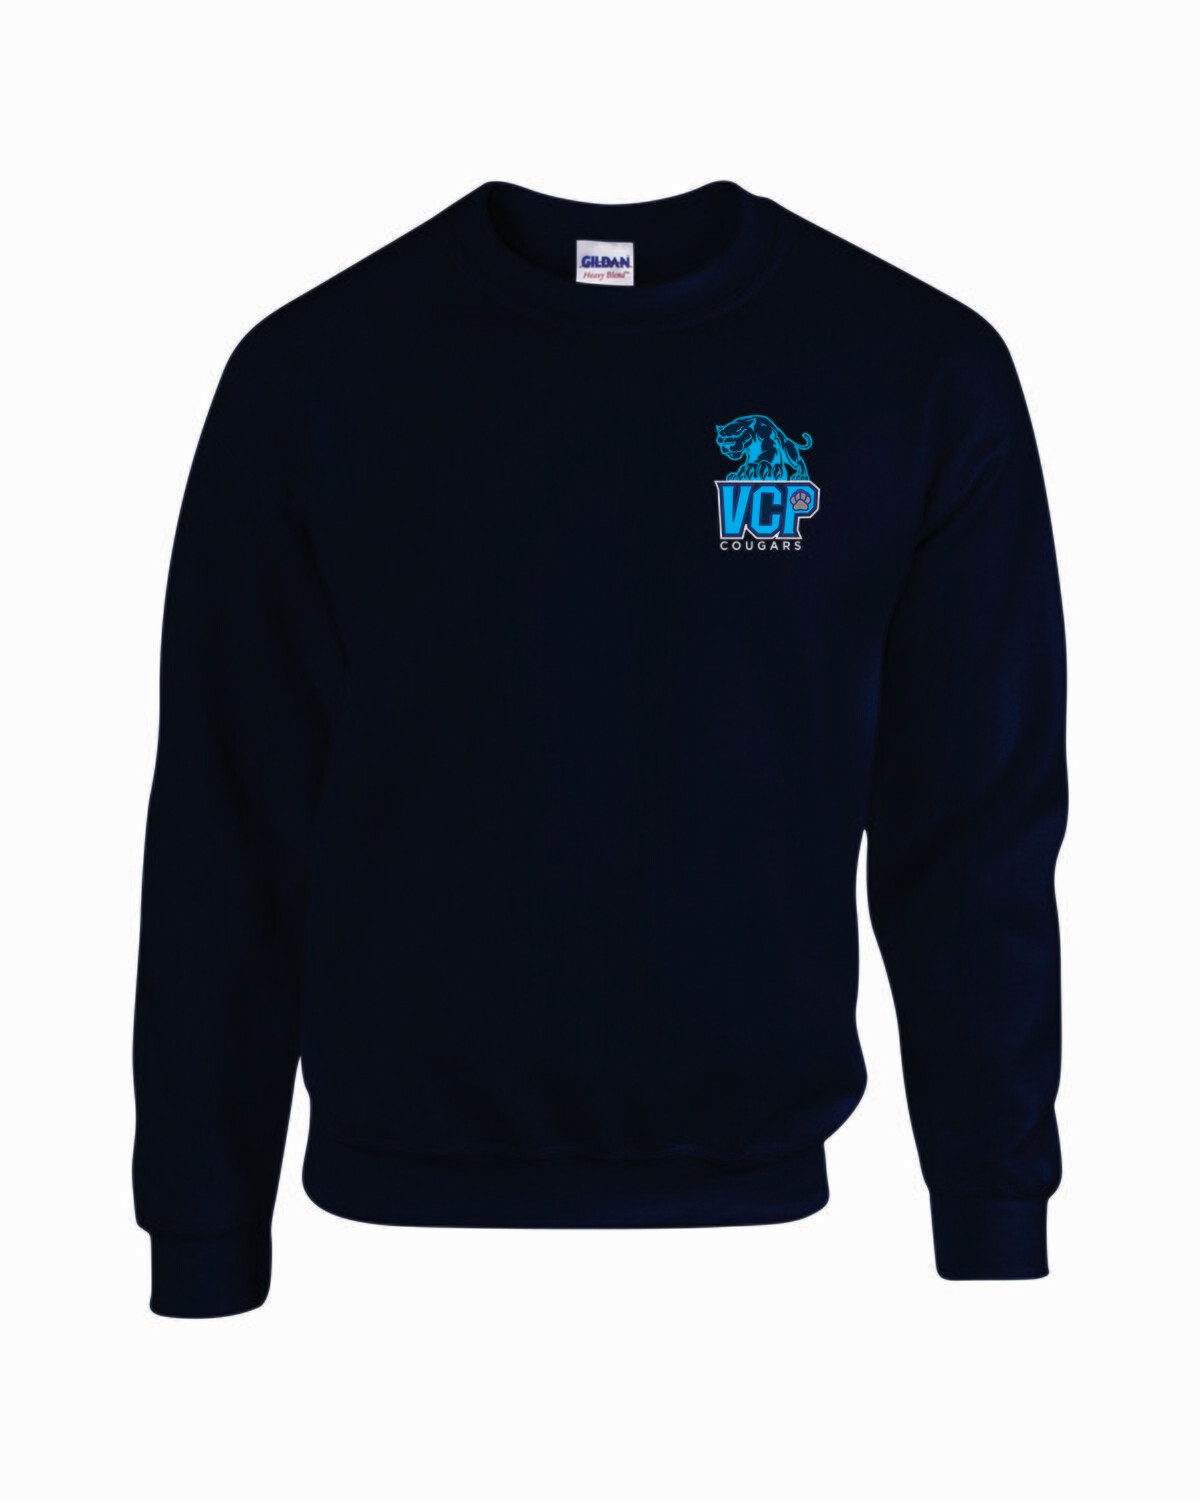 VCP Cougars Crewneck Sweatshirt Embroidered Logo